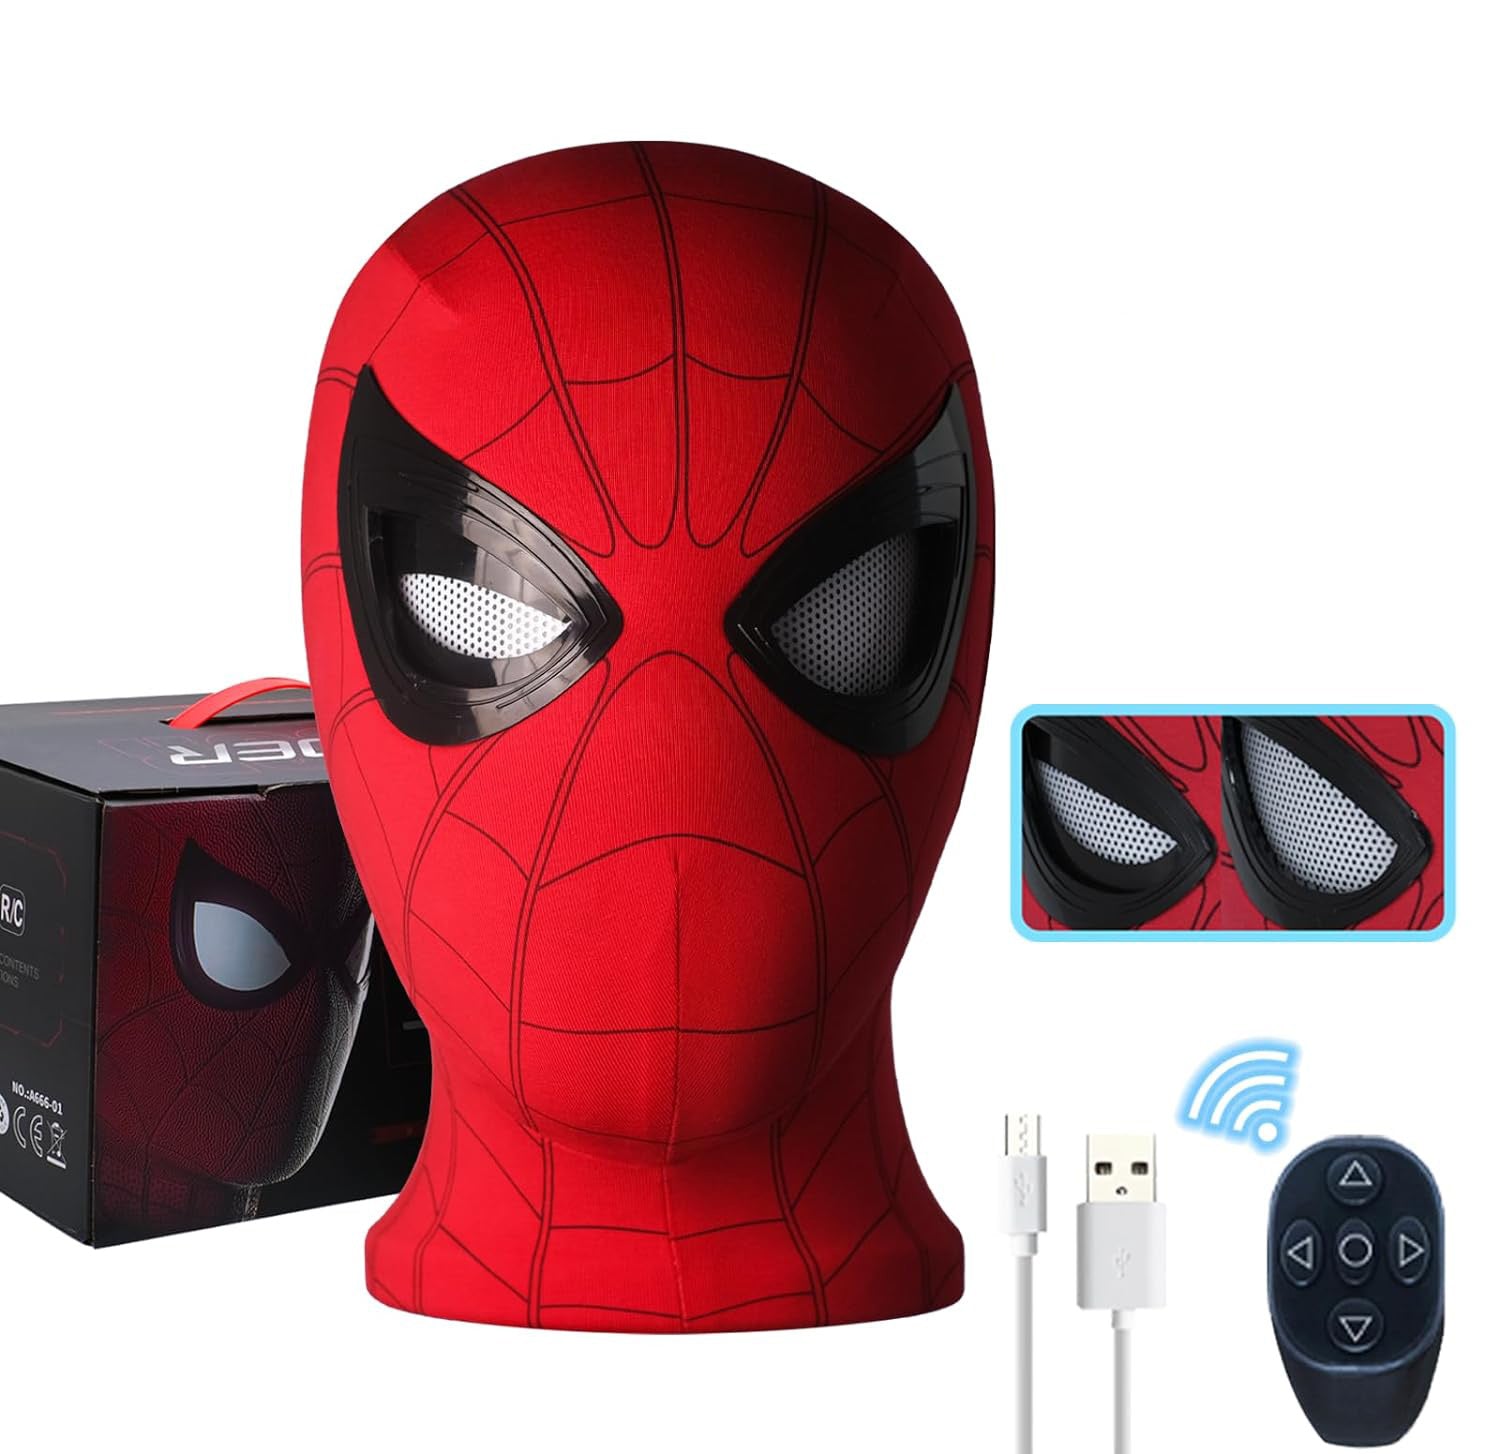 LED mechanical eyes remotely control Spider-Man mask